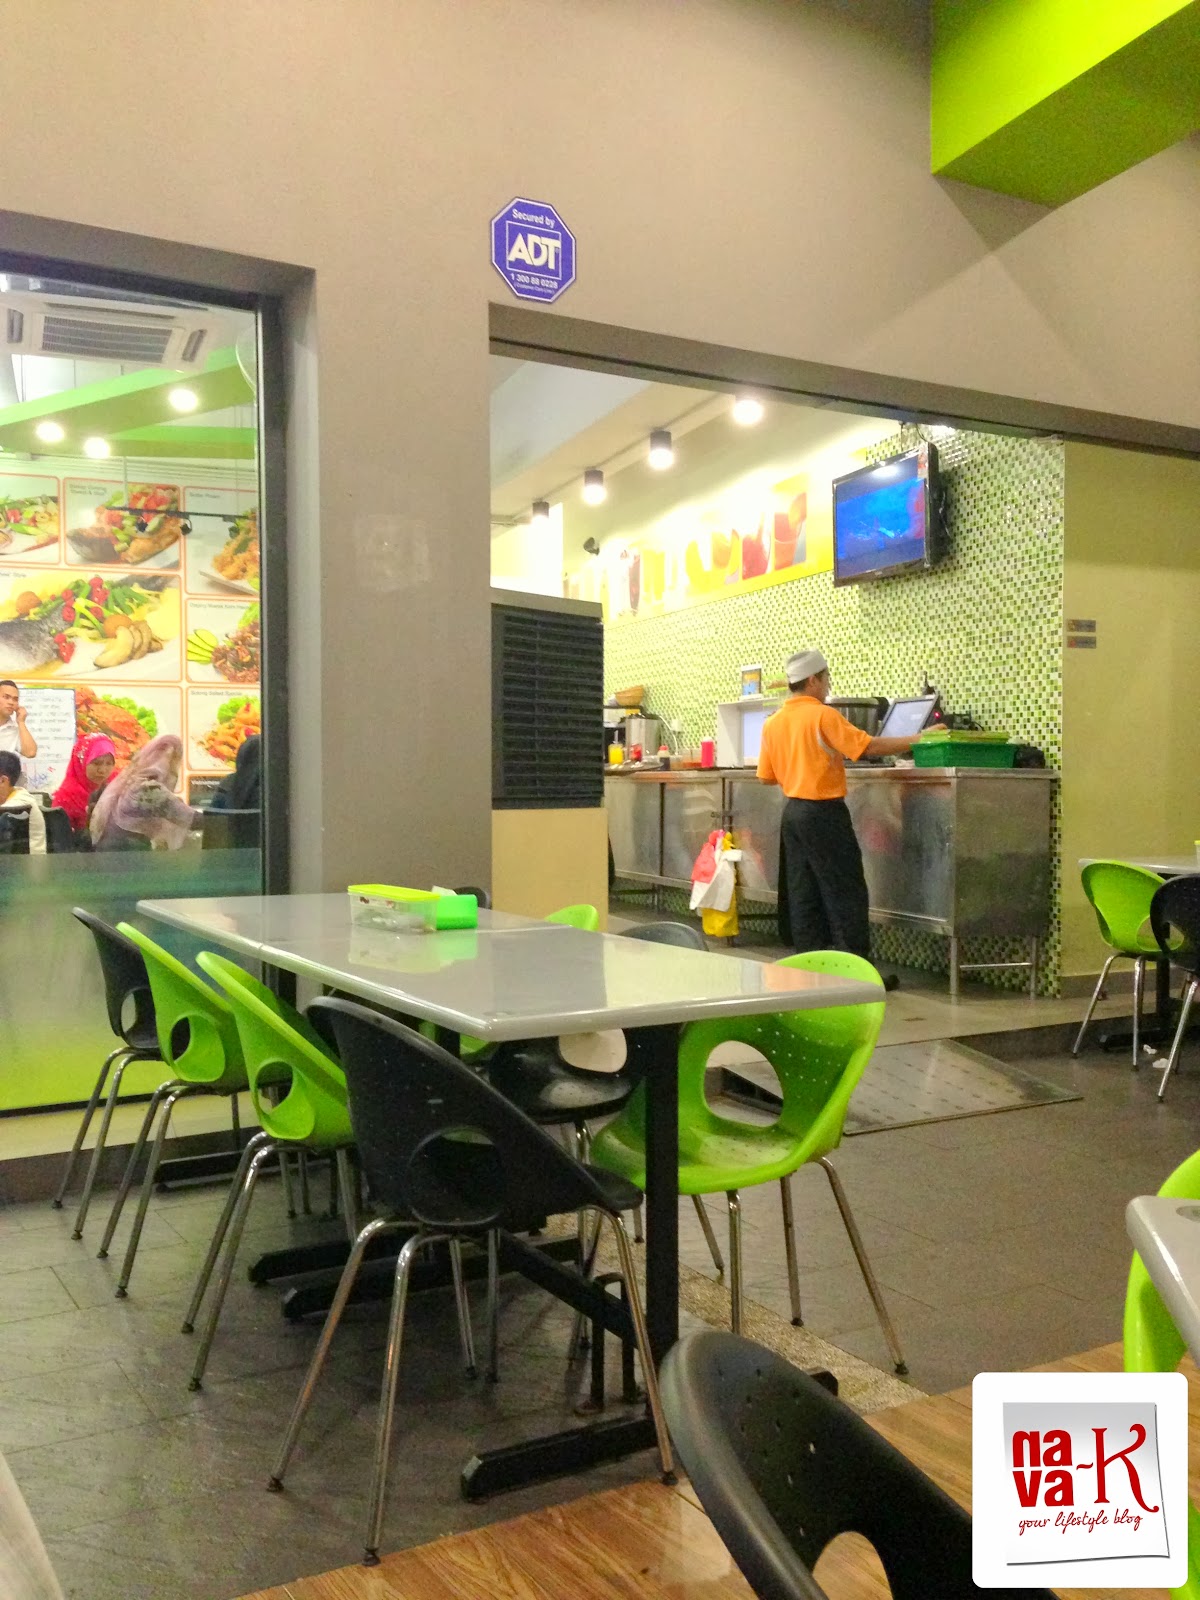 Nava-k: Restoran Mohd Chan - Kota Kemuning (Shah Alam)